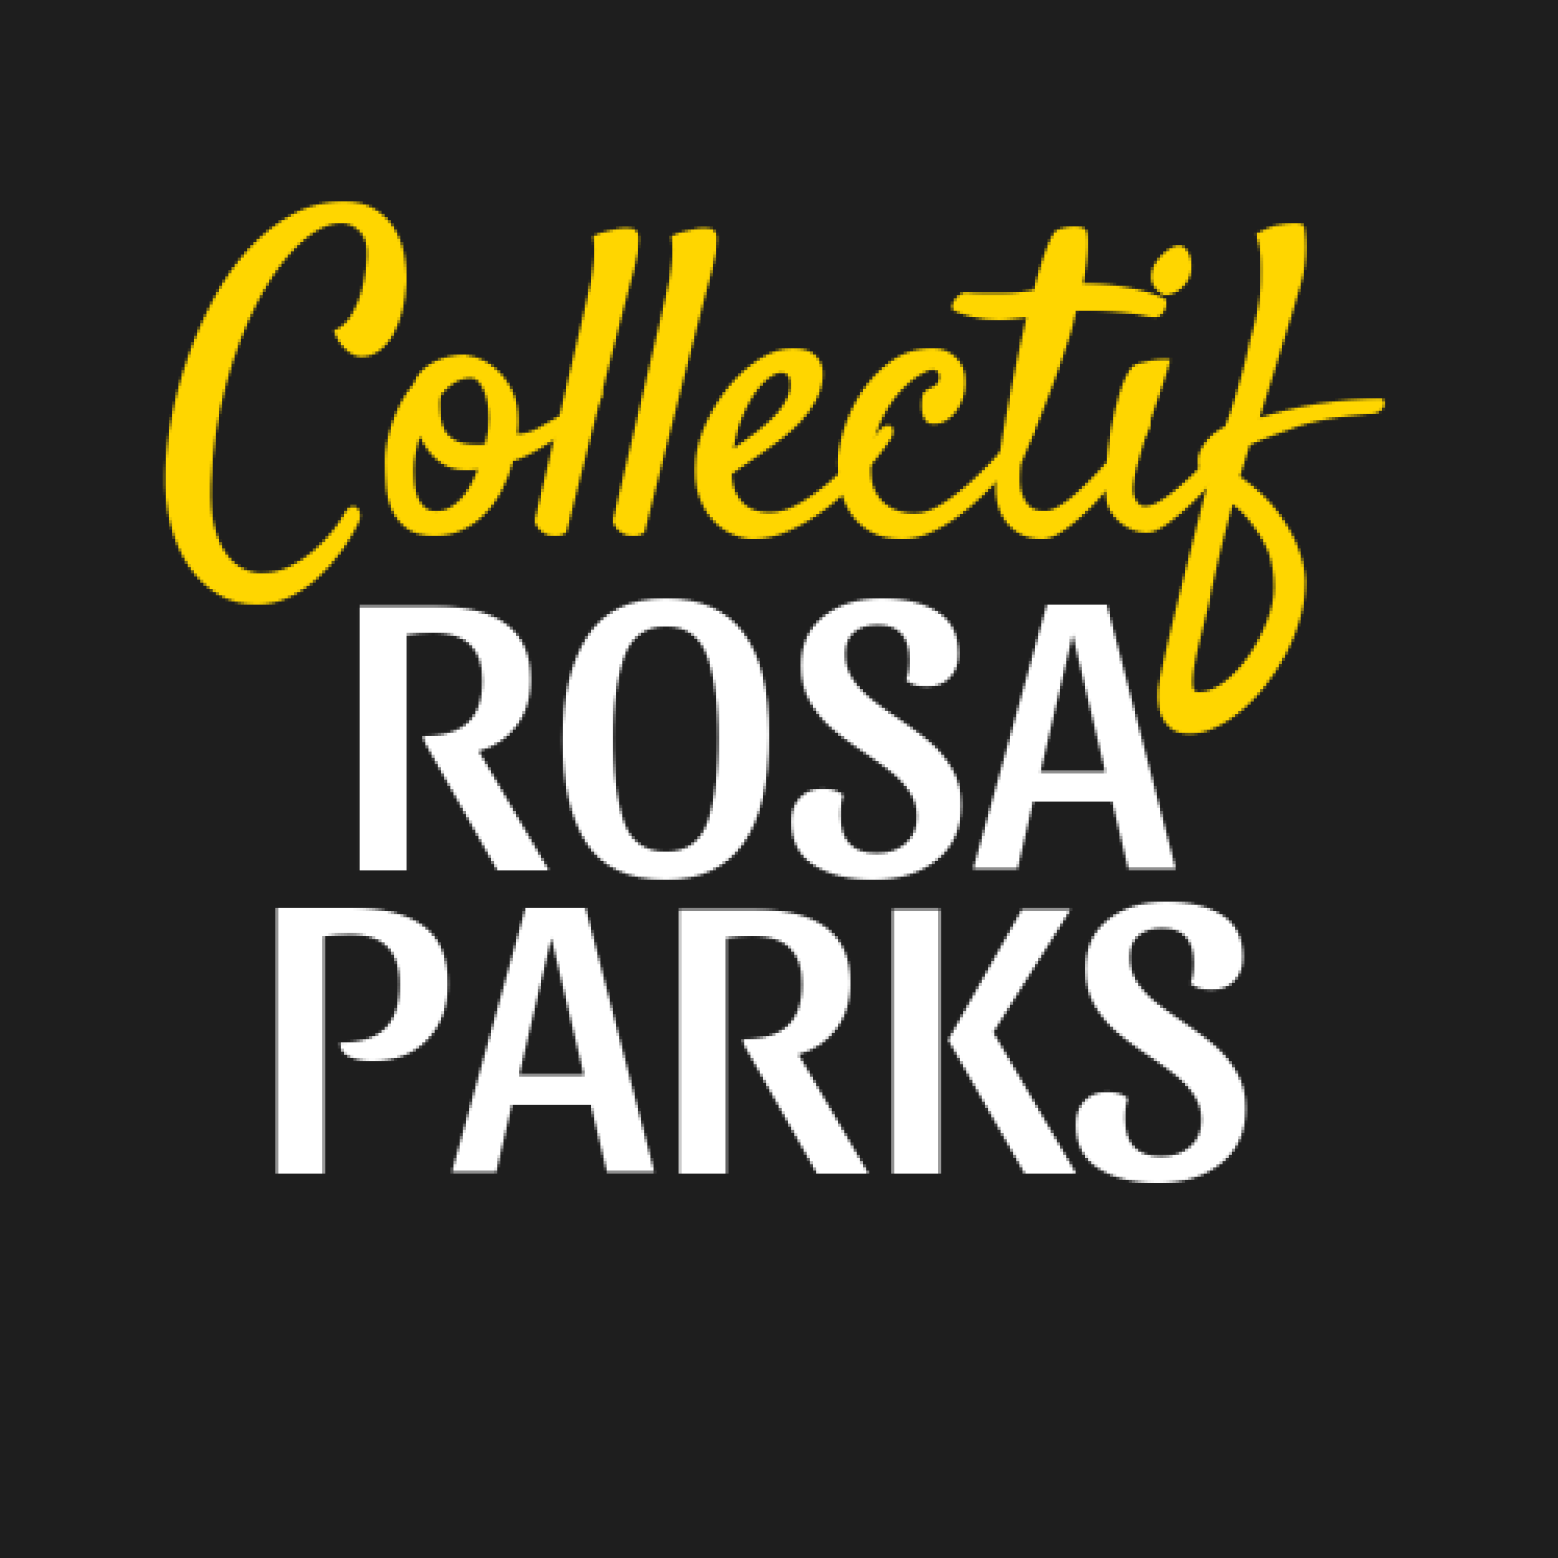 collectif-rosa-parks_0